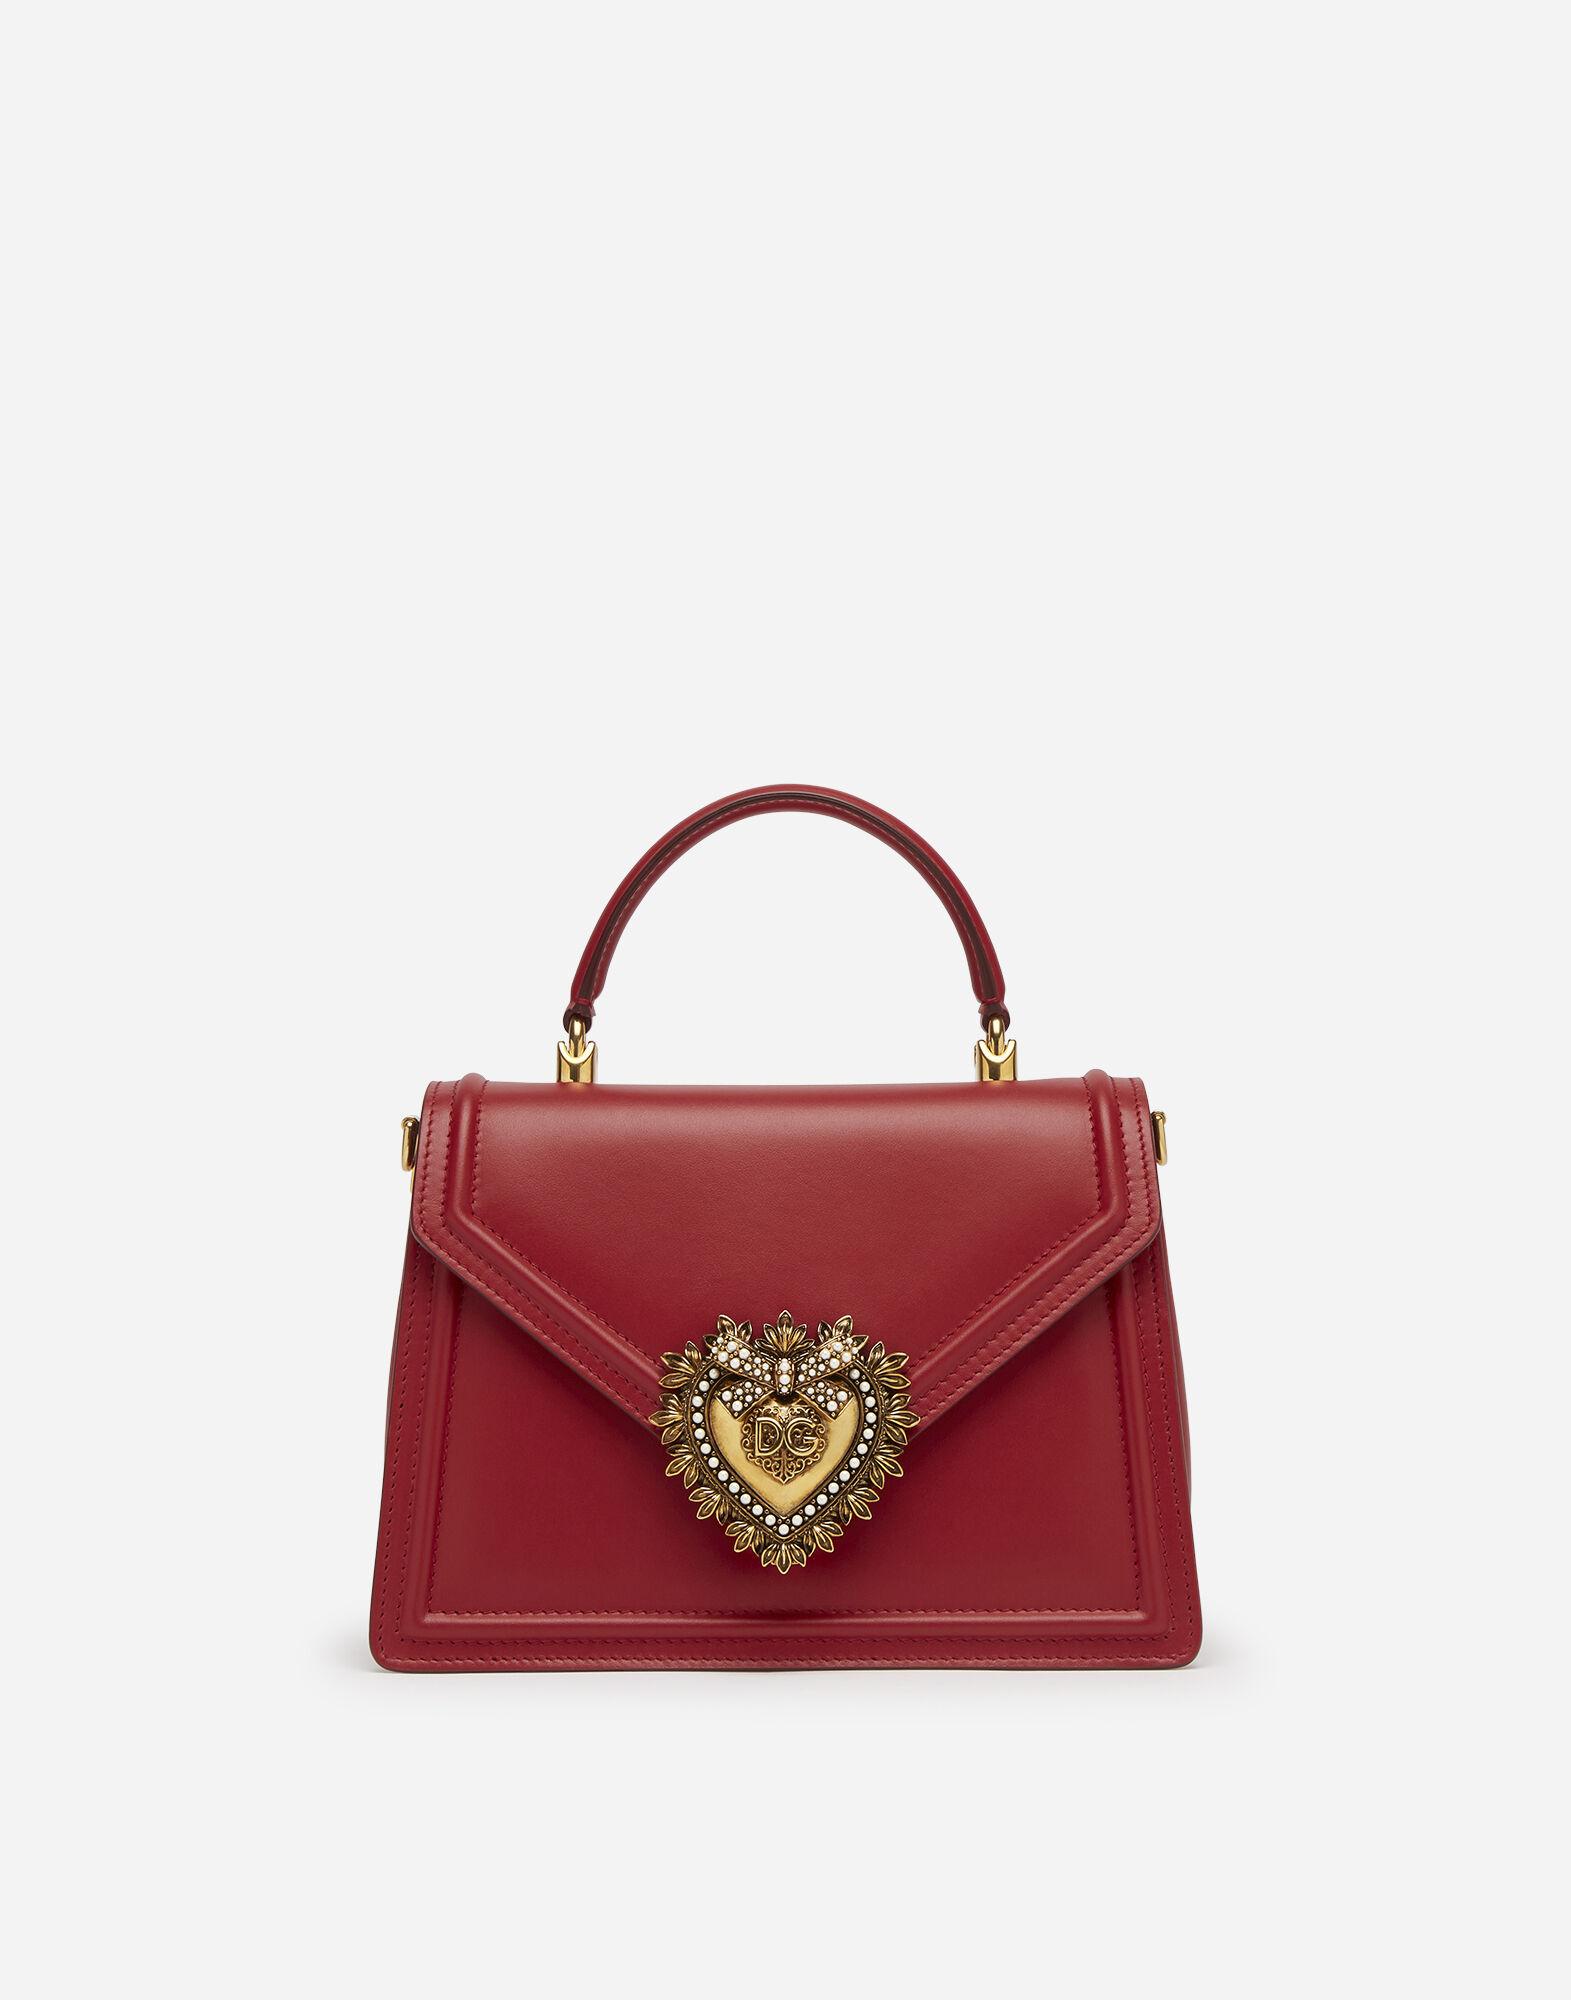 Dolce & Gabbana Leather Medium Devotion Bag in Red - Lyst